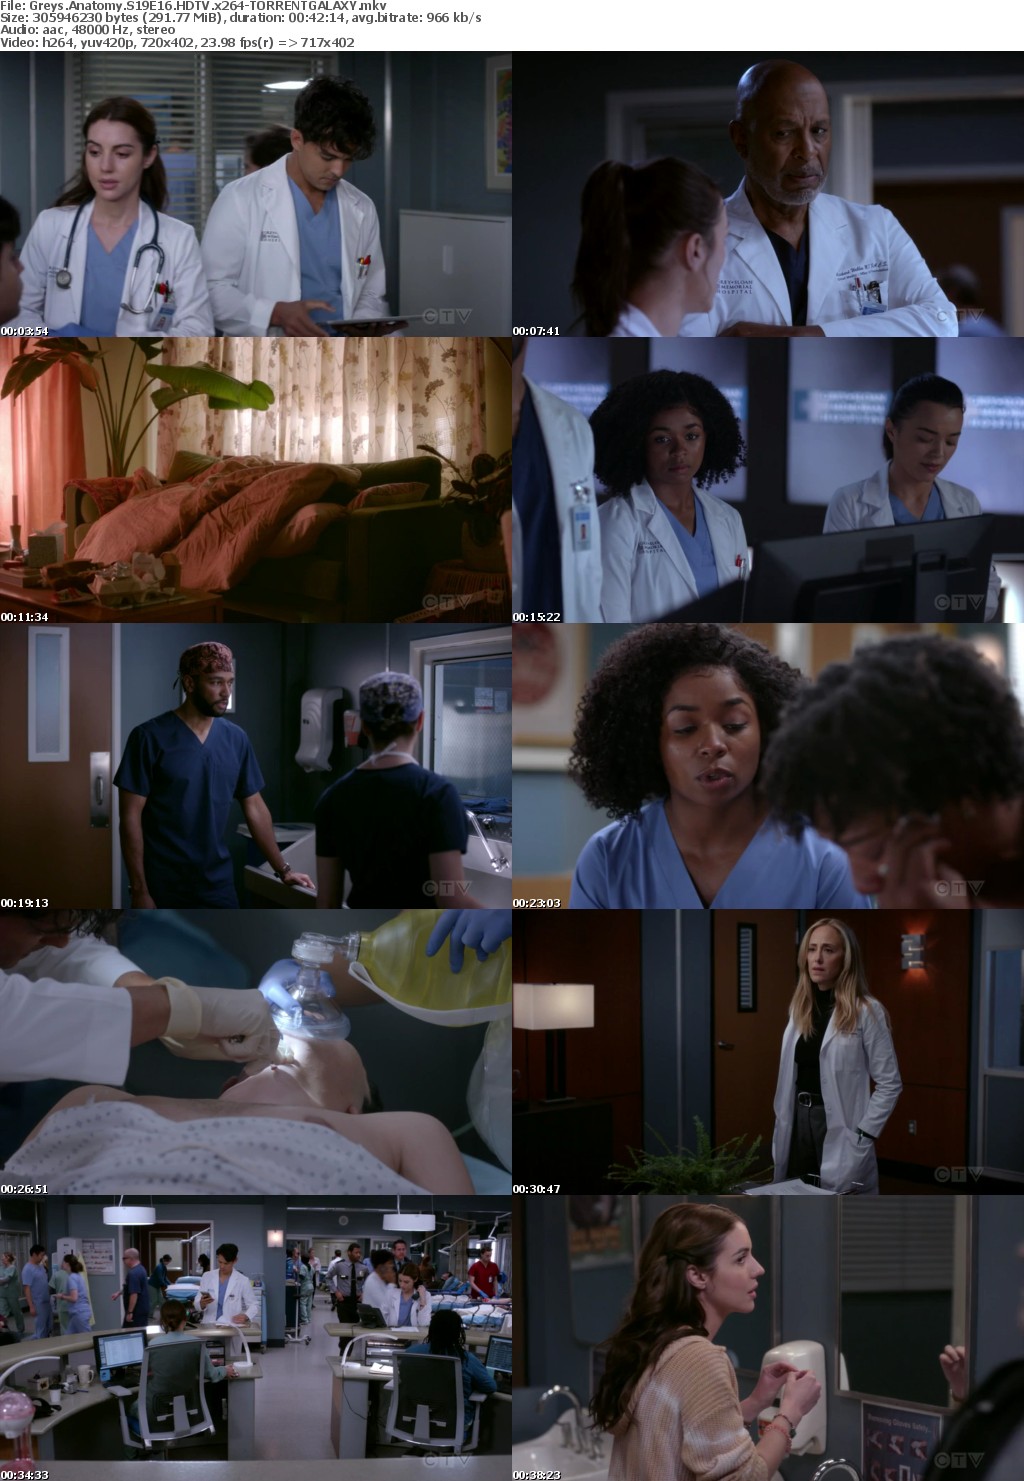 Greys Anatomy S19E16 HDTV x264-GALAXY